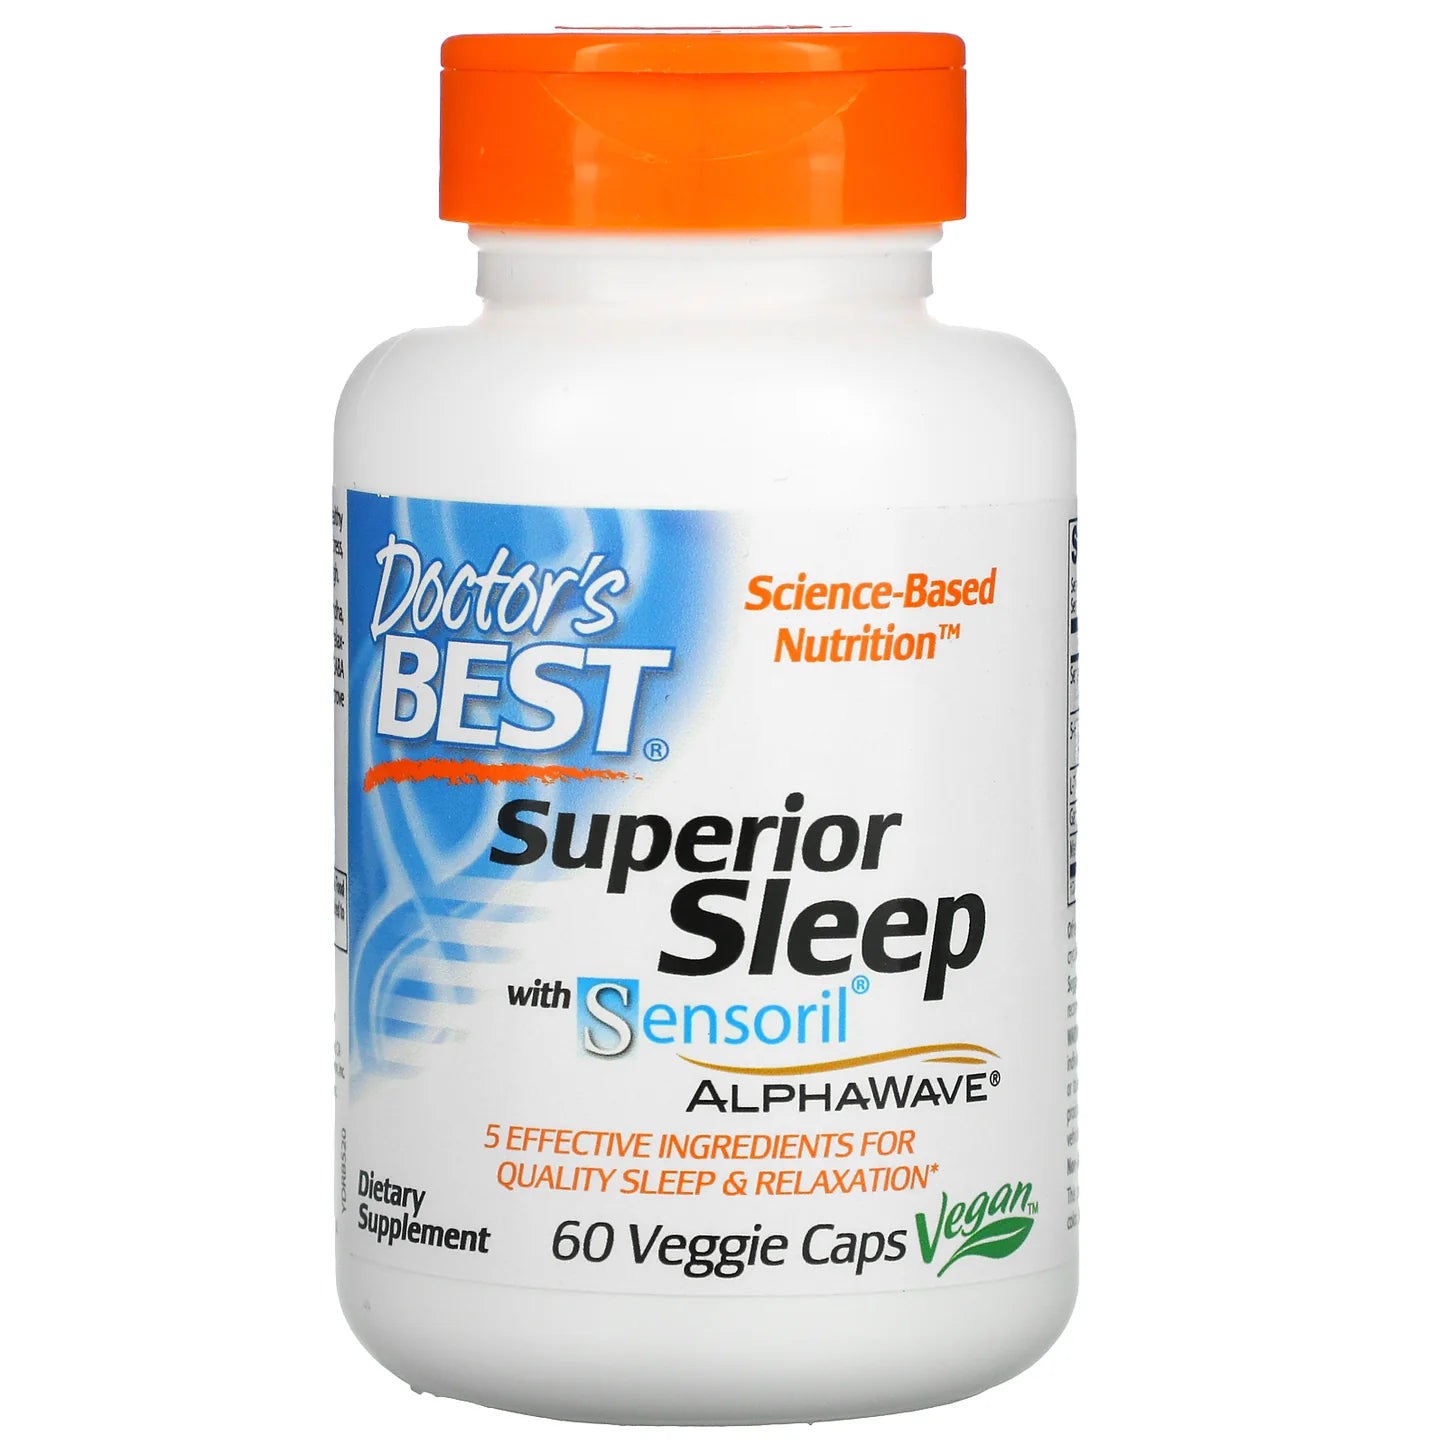 Doctor's Best Superior Sleep with Sensoril AlphaWave, 60 Veggie Caps